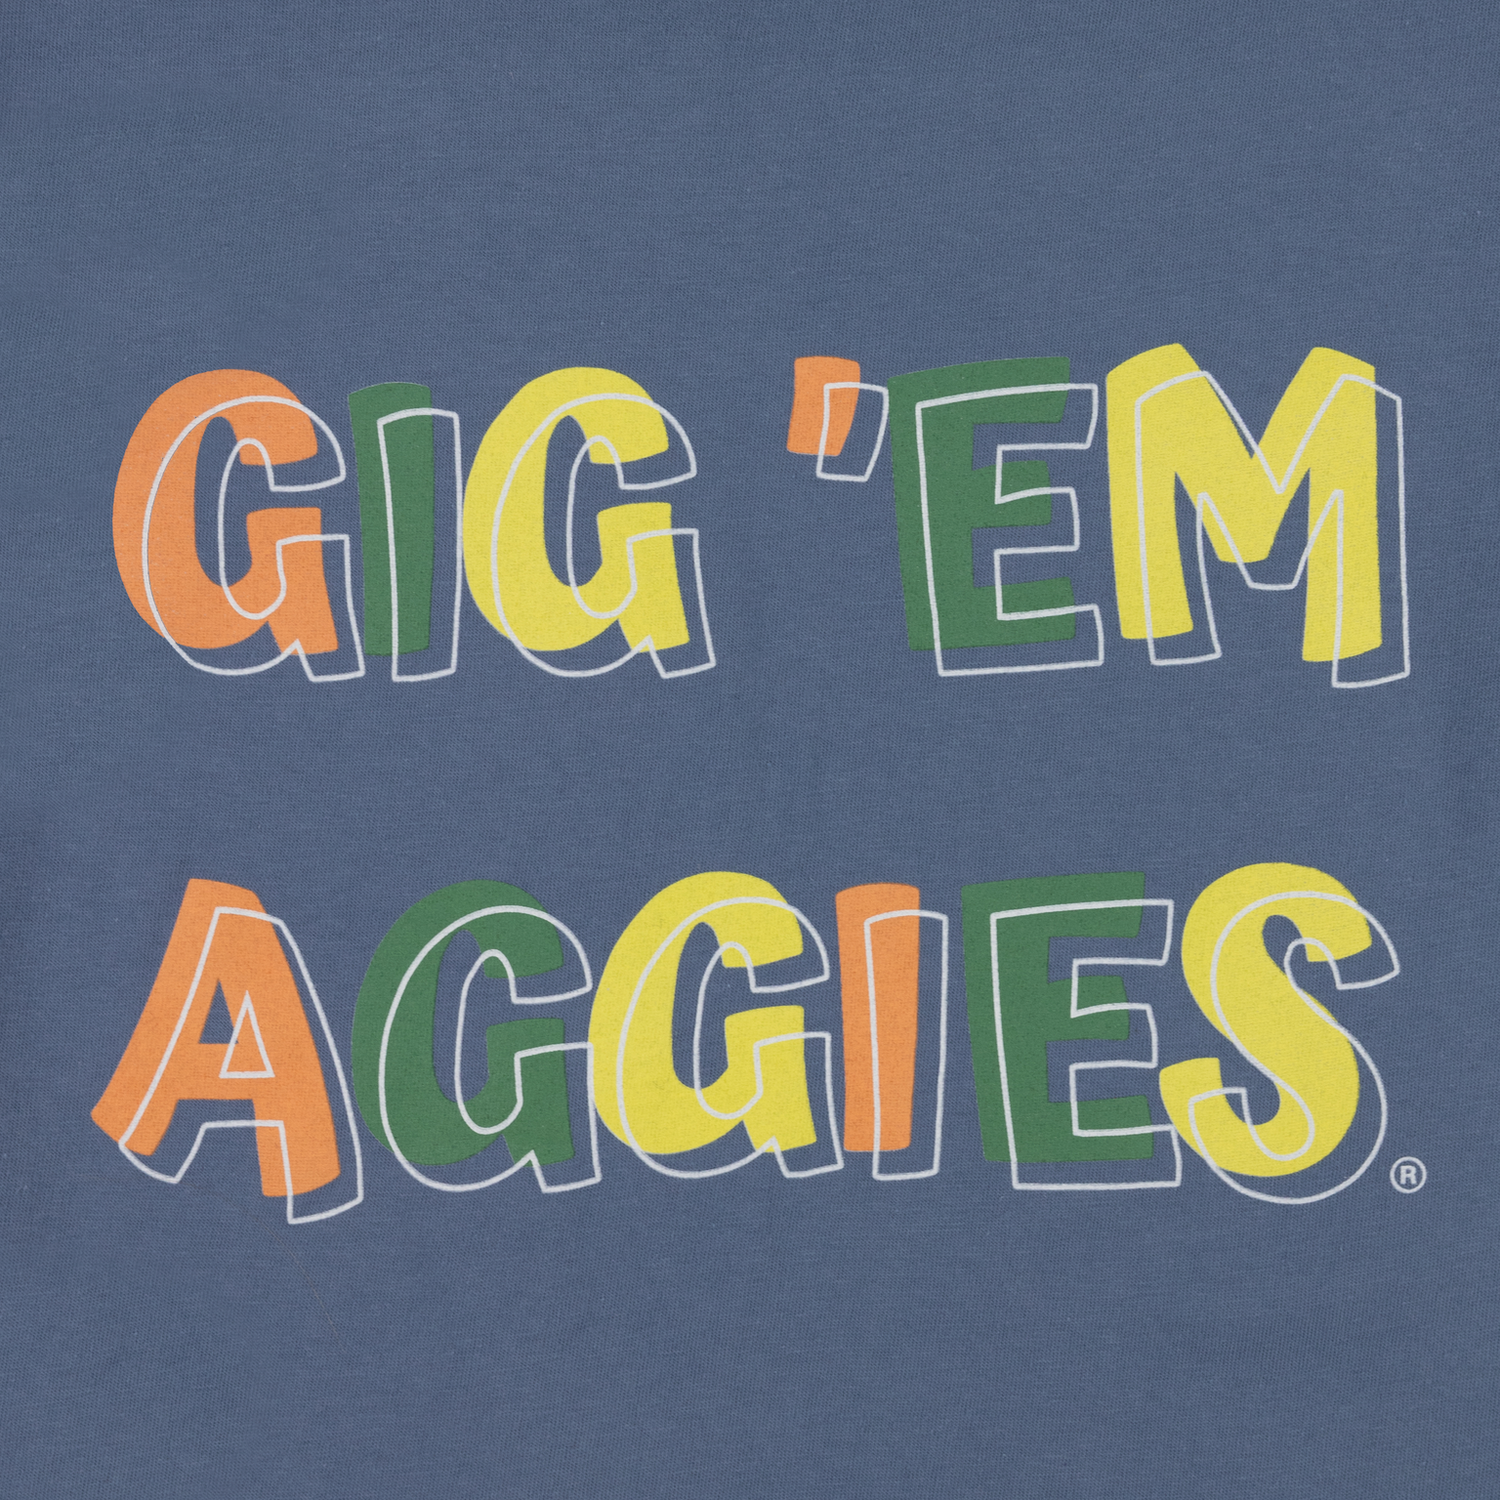 Colorful Gig 'Em Aggies T-Shirt